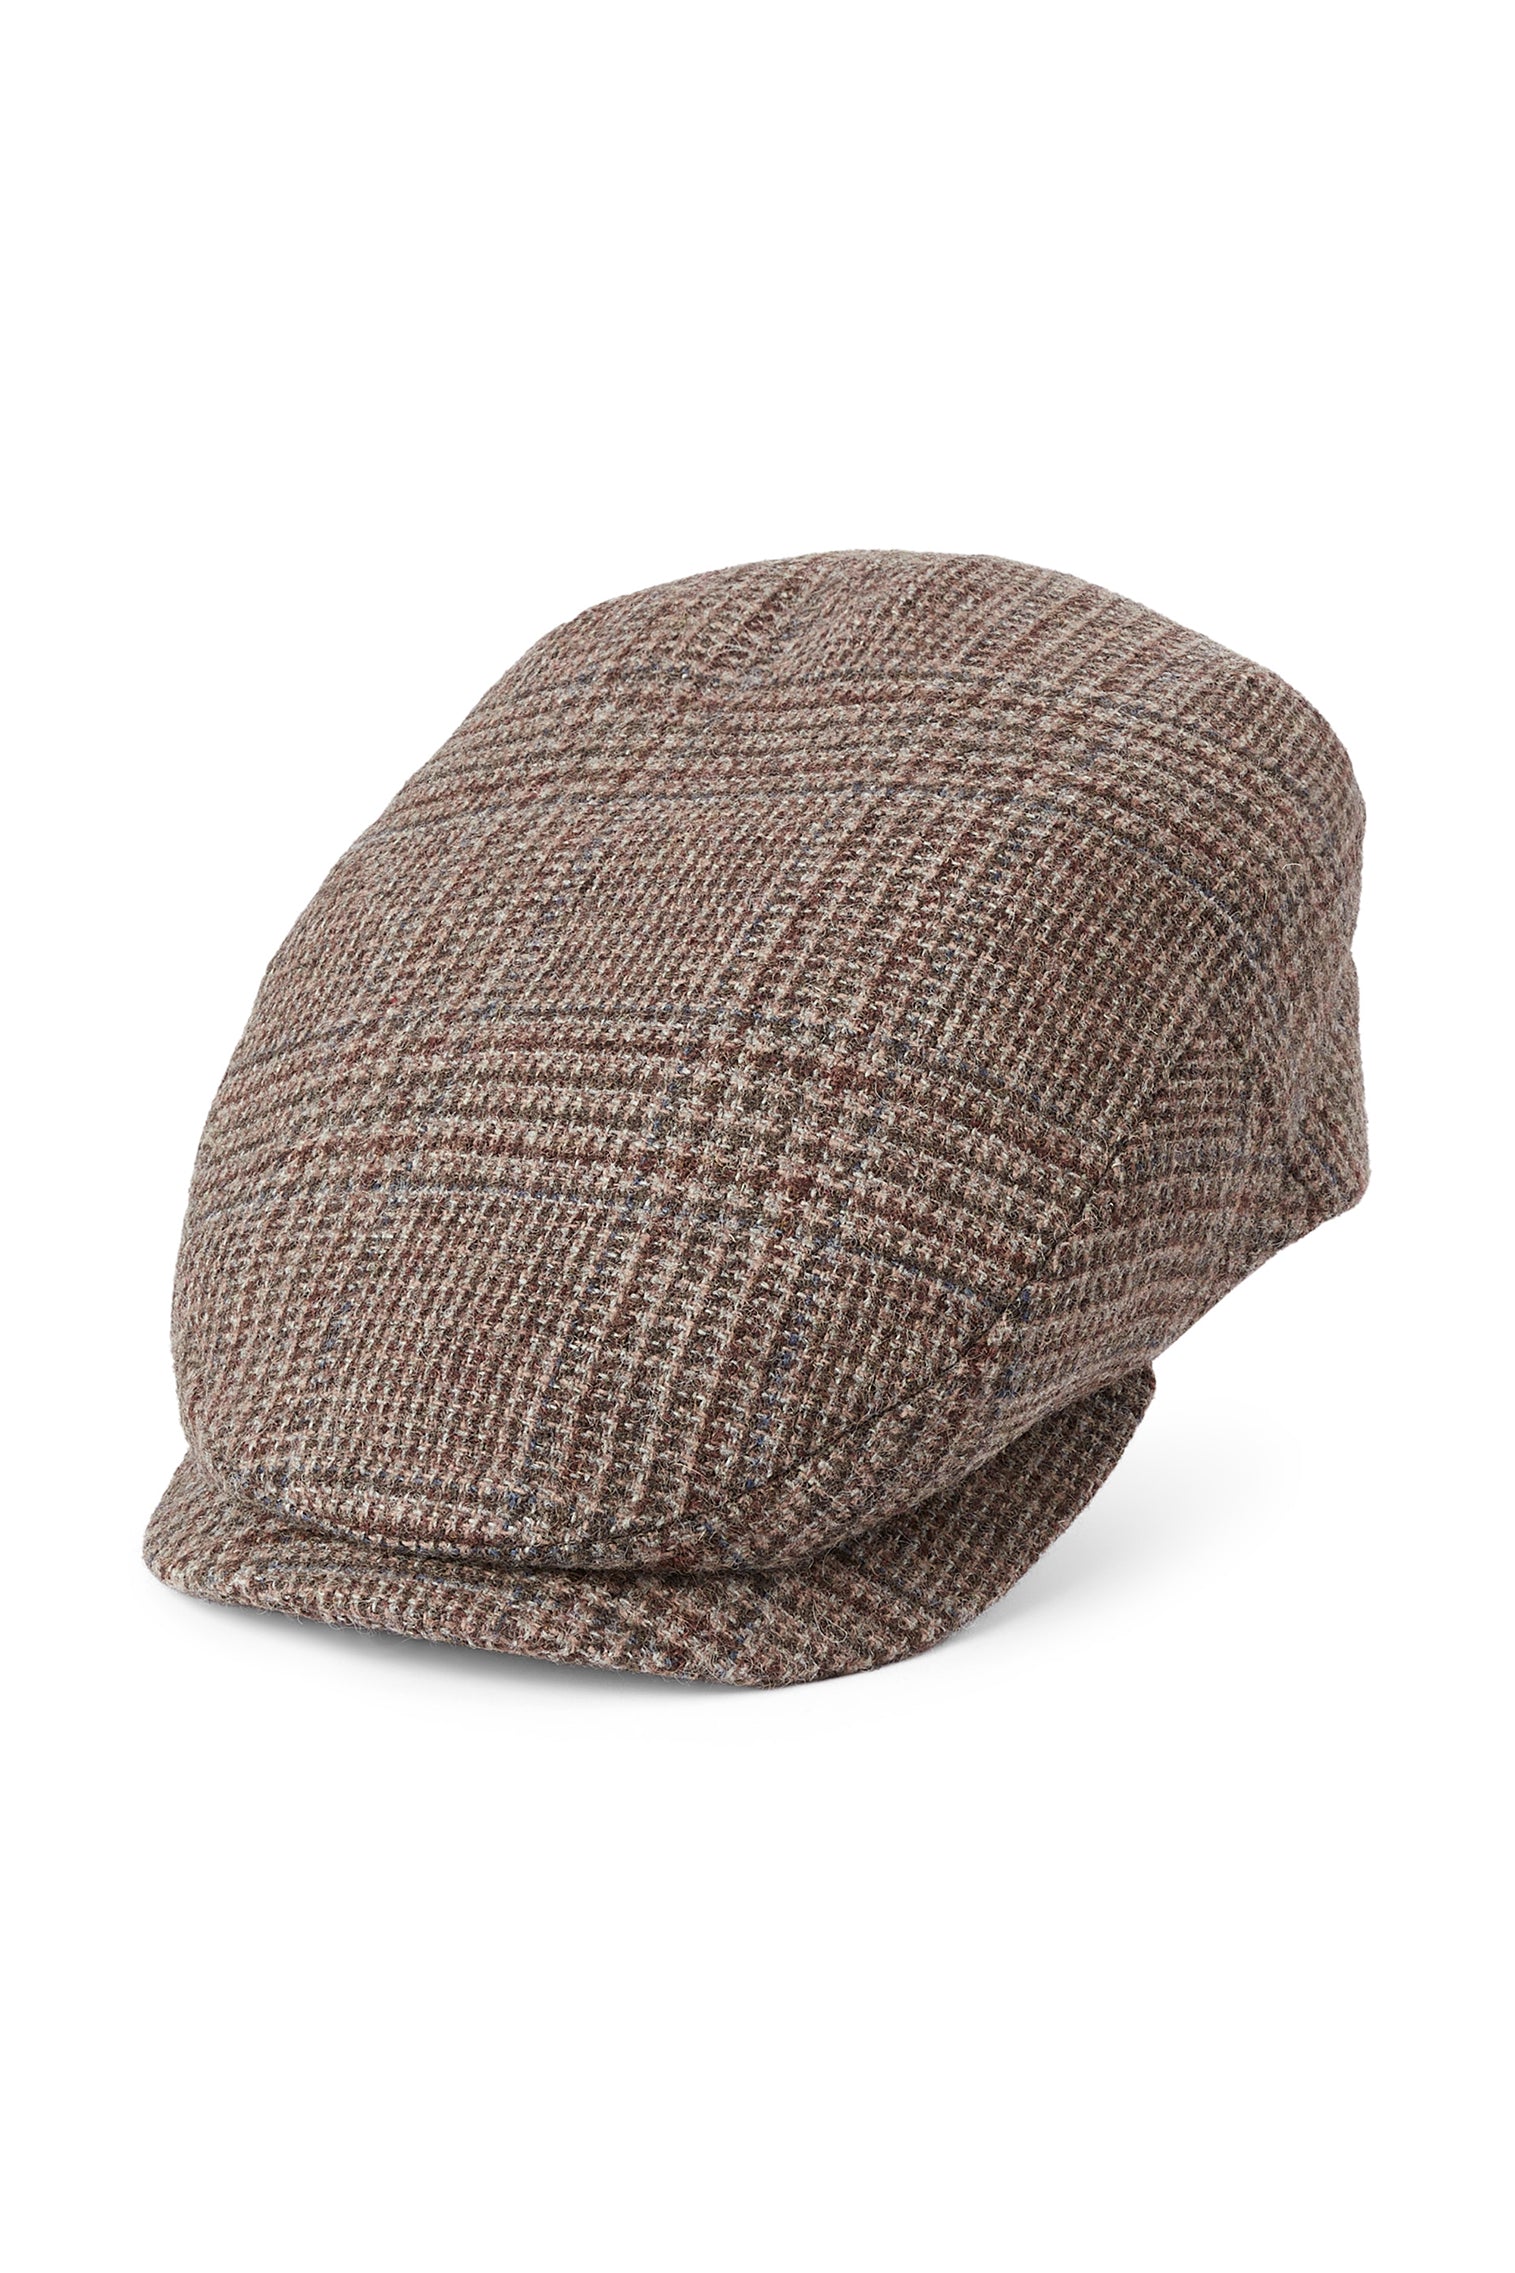 Drifter Glen Check Flat Cap - Hats for Tall People - Lock & Co. Hatters London UK